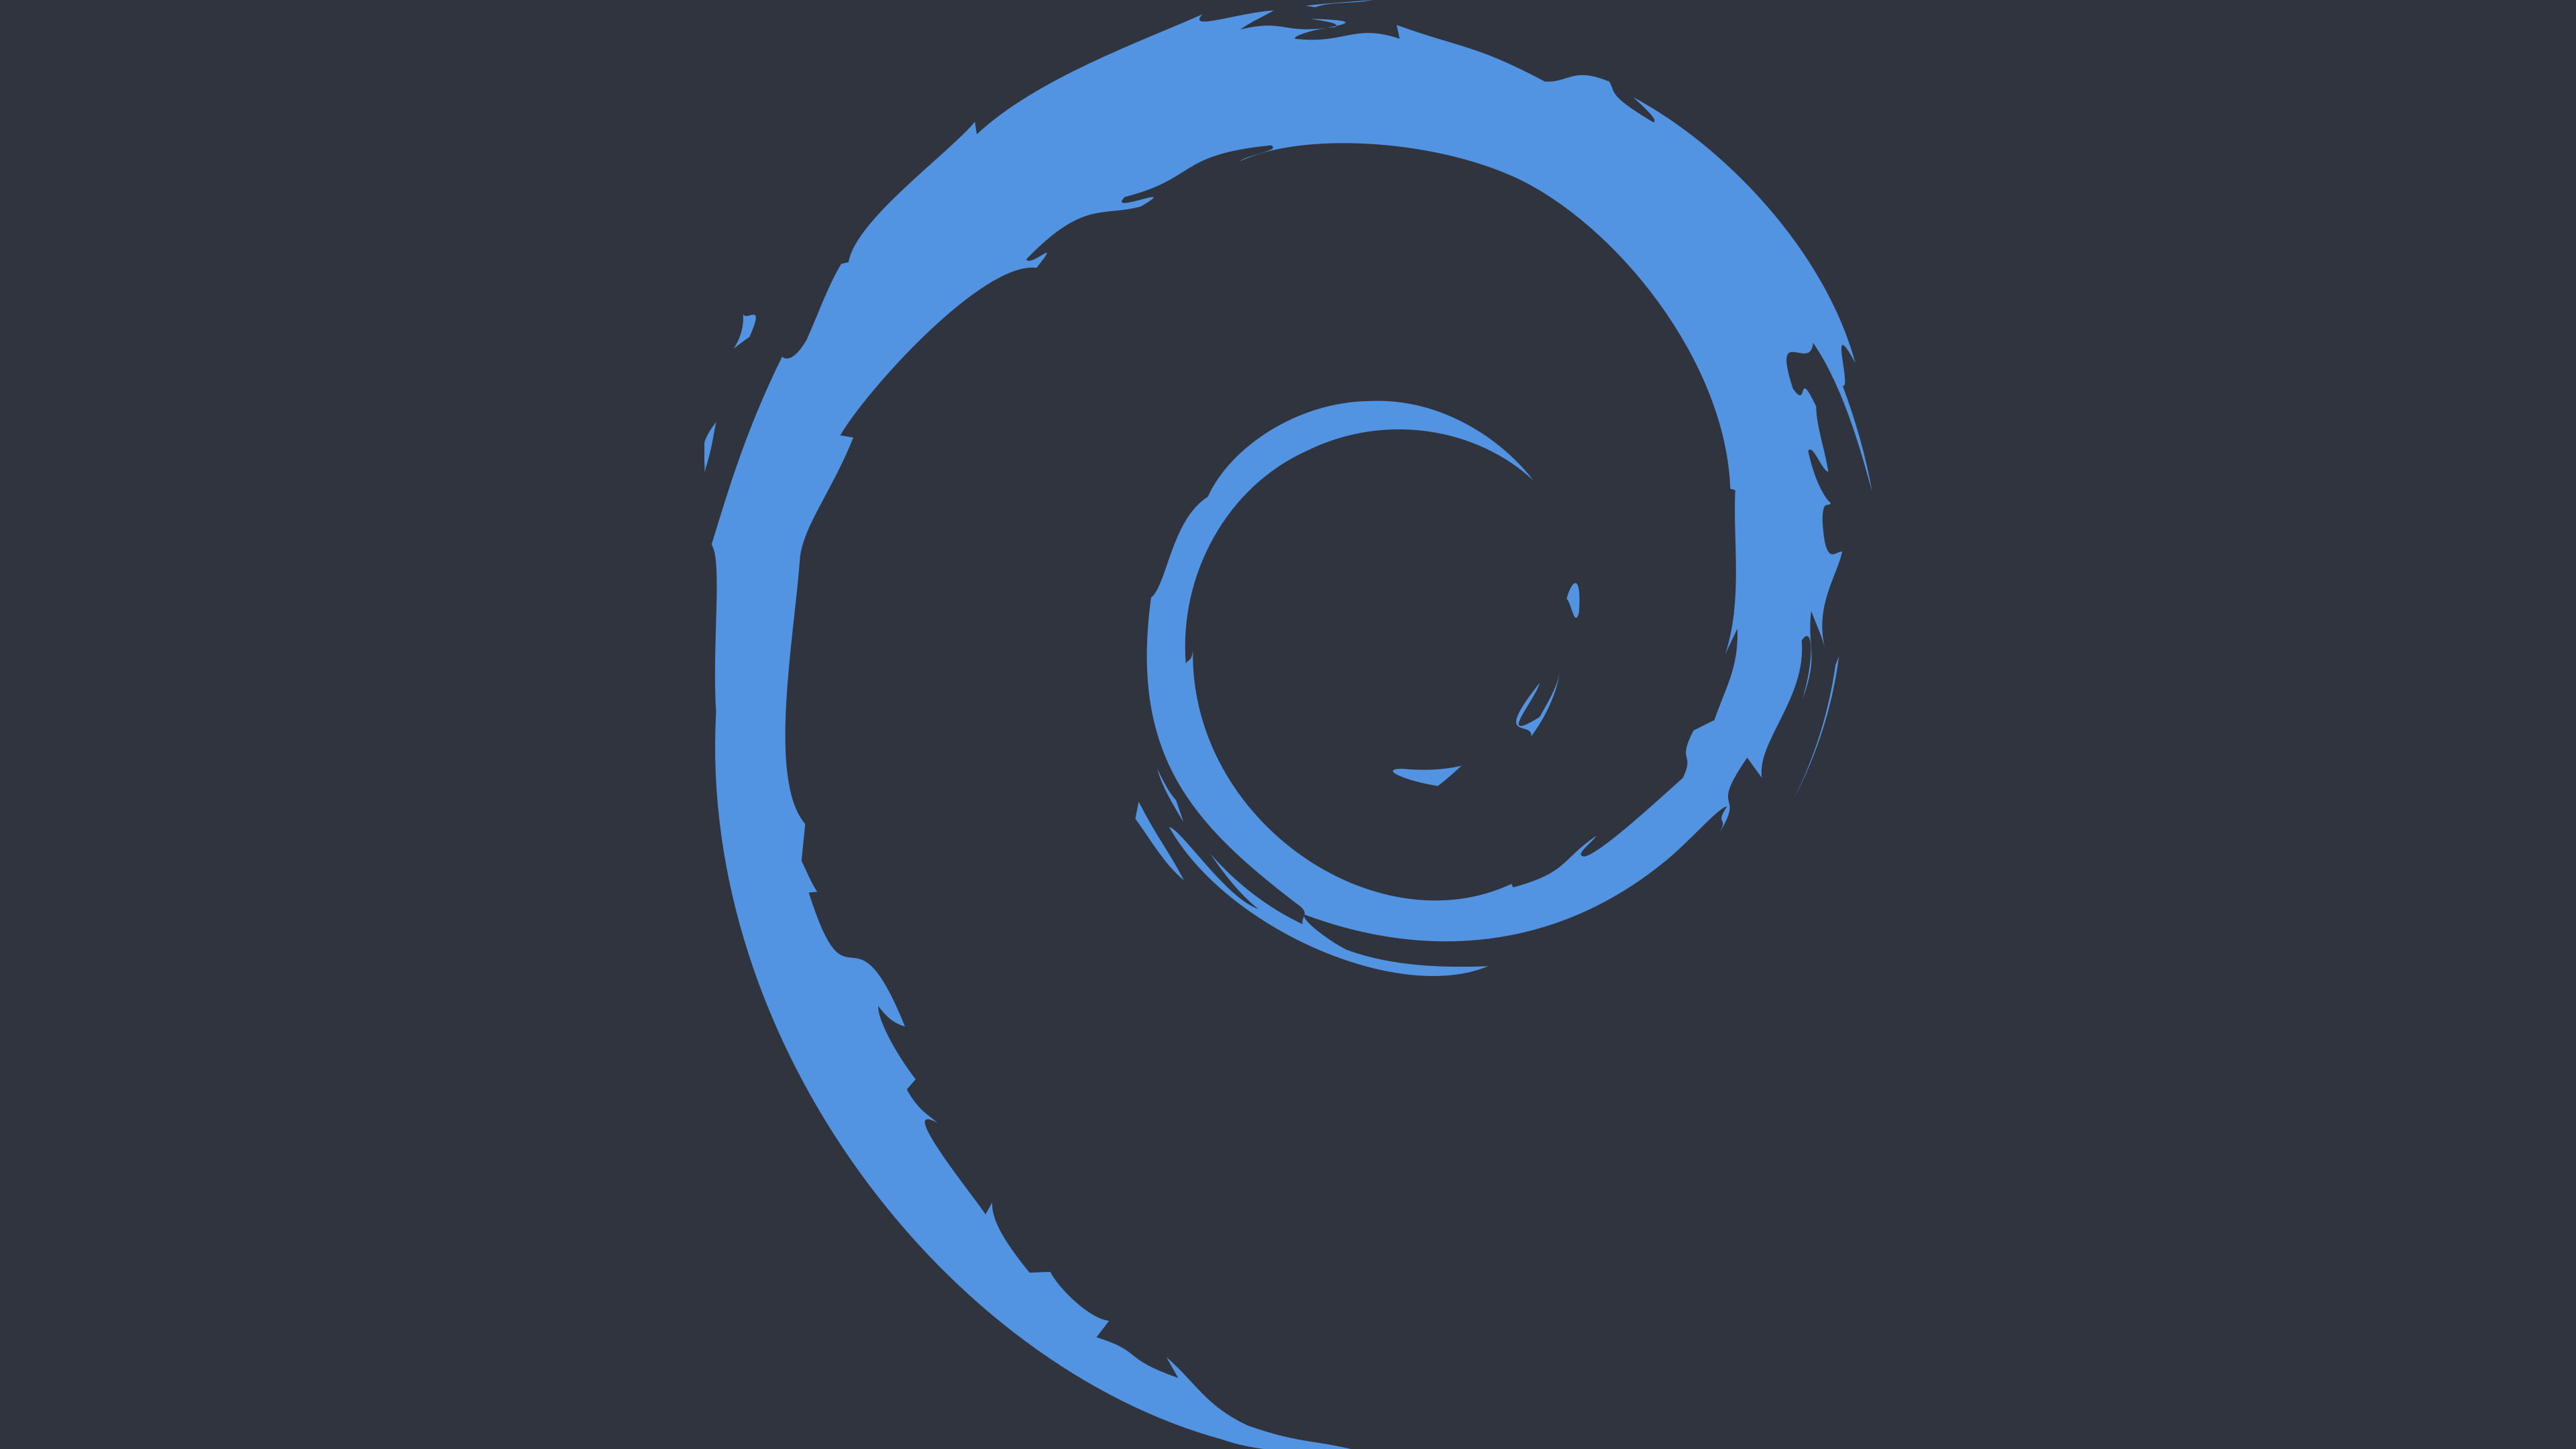 Fondo de pantalla digital en espiral negro y azul, Software libre, GNU, Linux